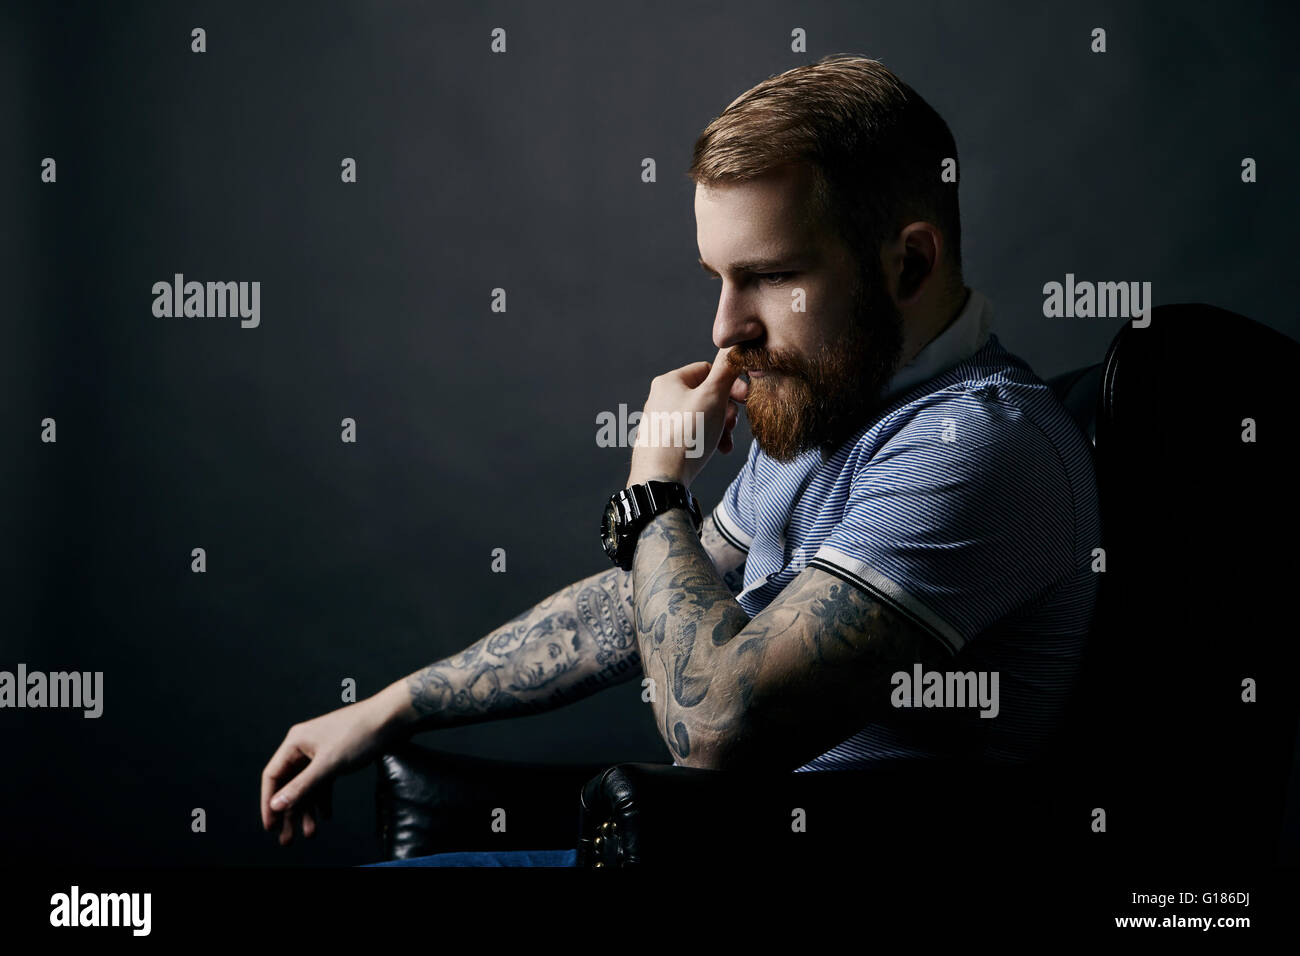 Thoughtful red bearded man studio portrait on dark background Stock Photo